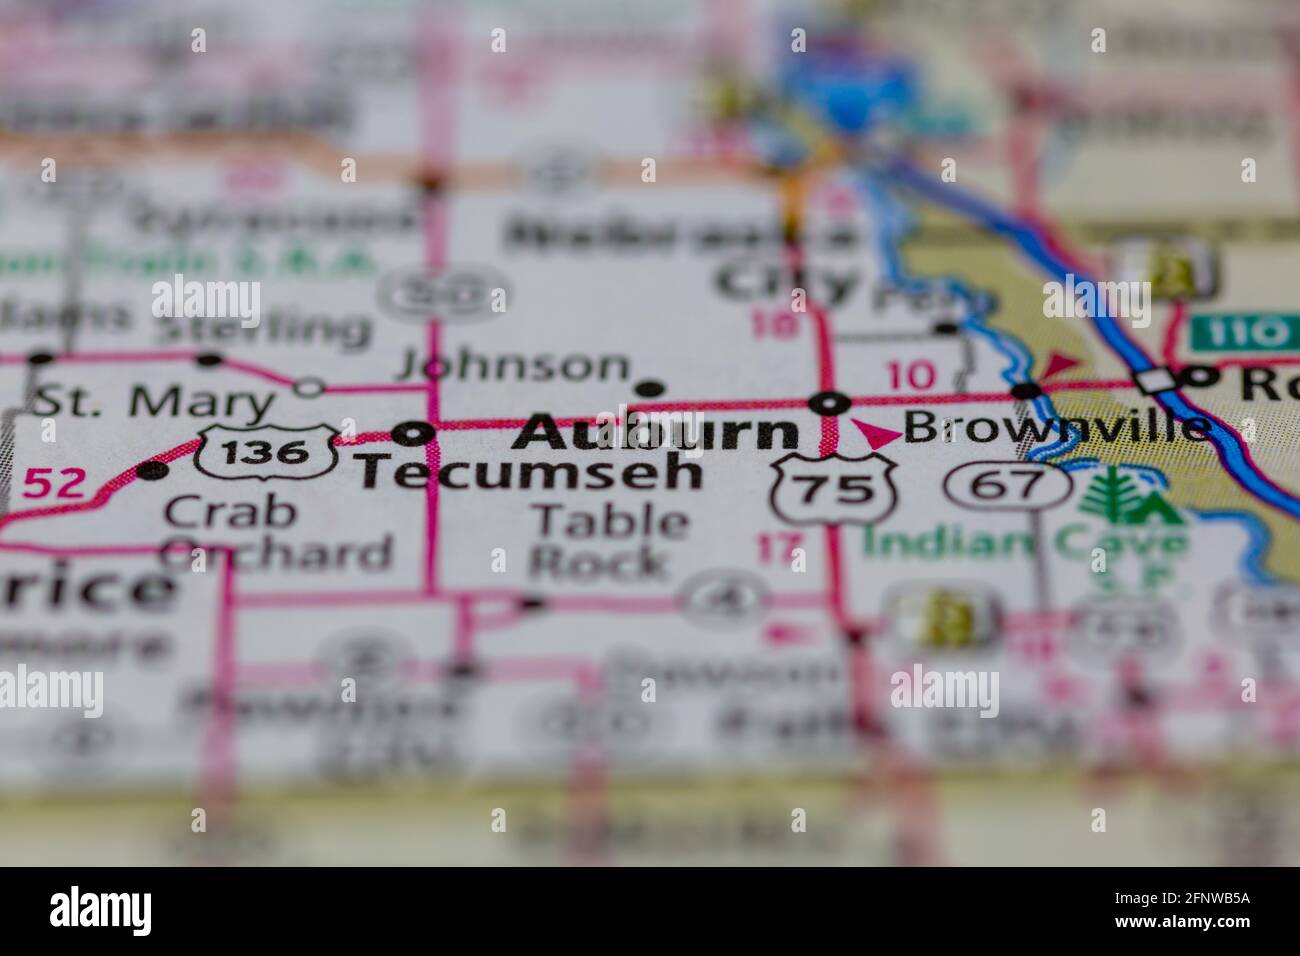 Auburn Nebraska USA Shown on a Geography map or Road map Stock Photo